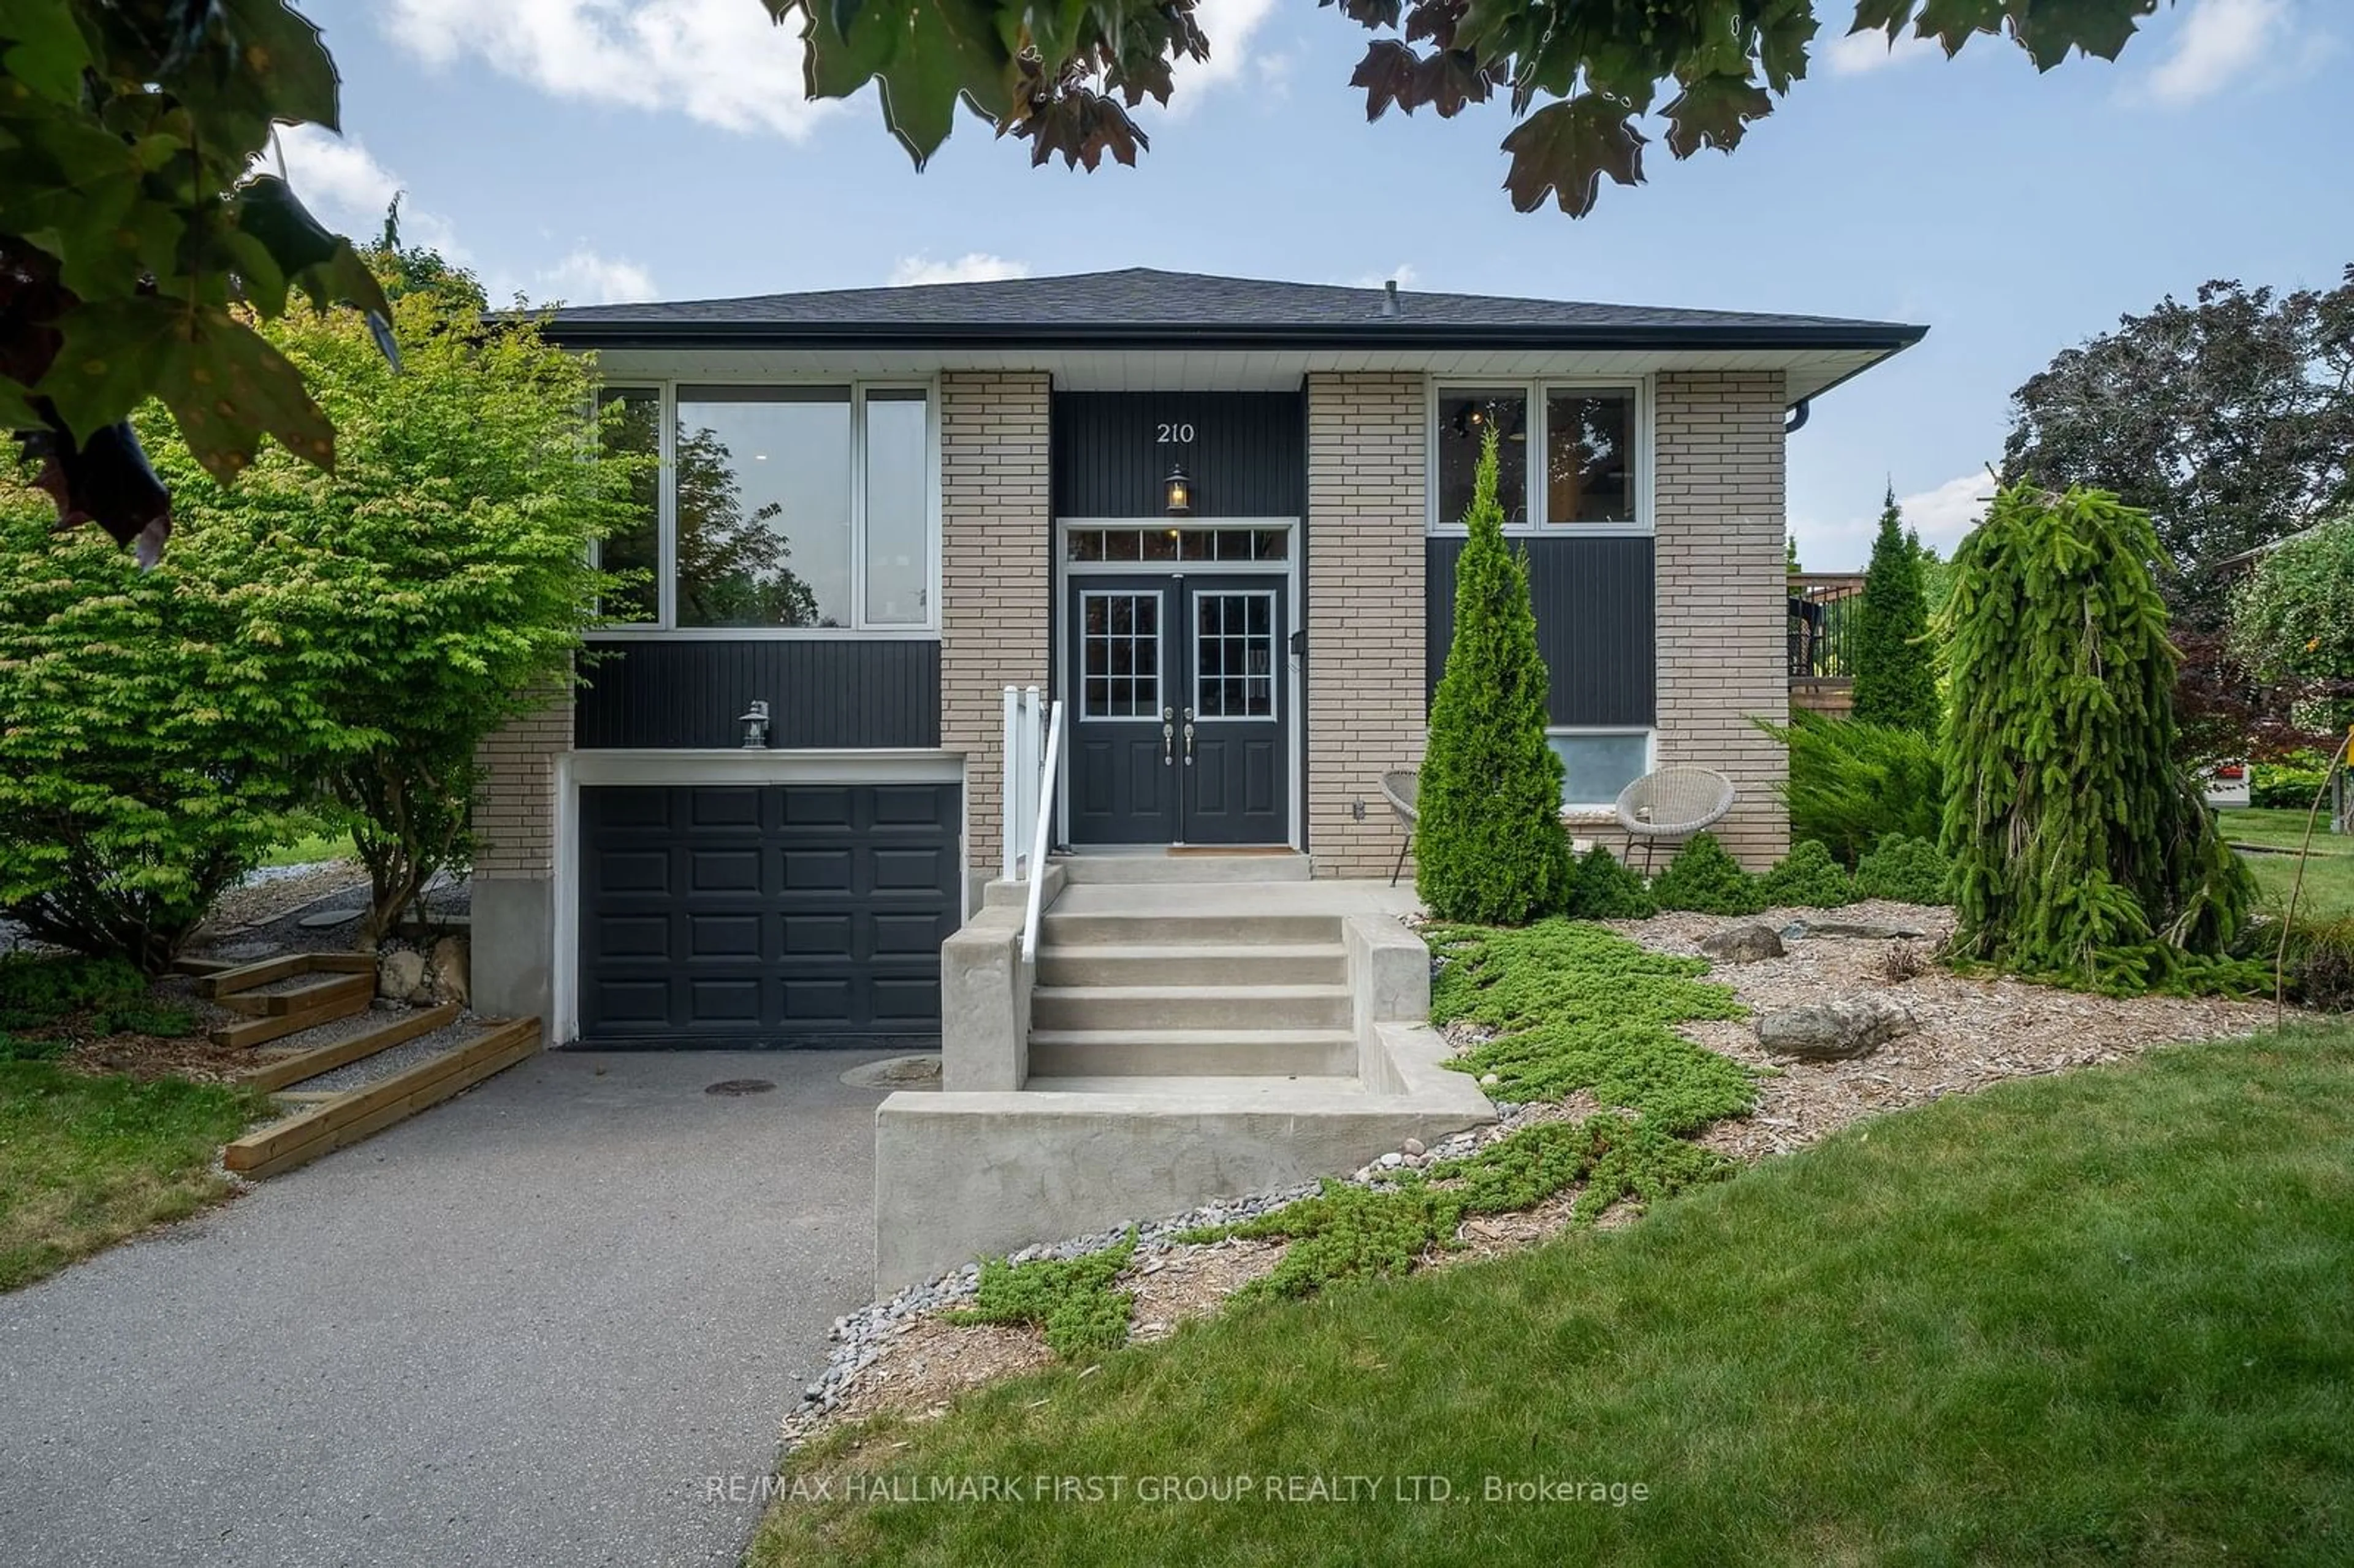 Home with brick exterior material for 210 Violet Crt, Oshawa Ontario L1G 3E5